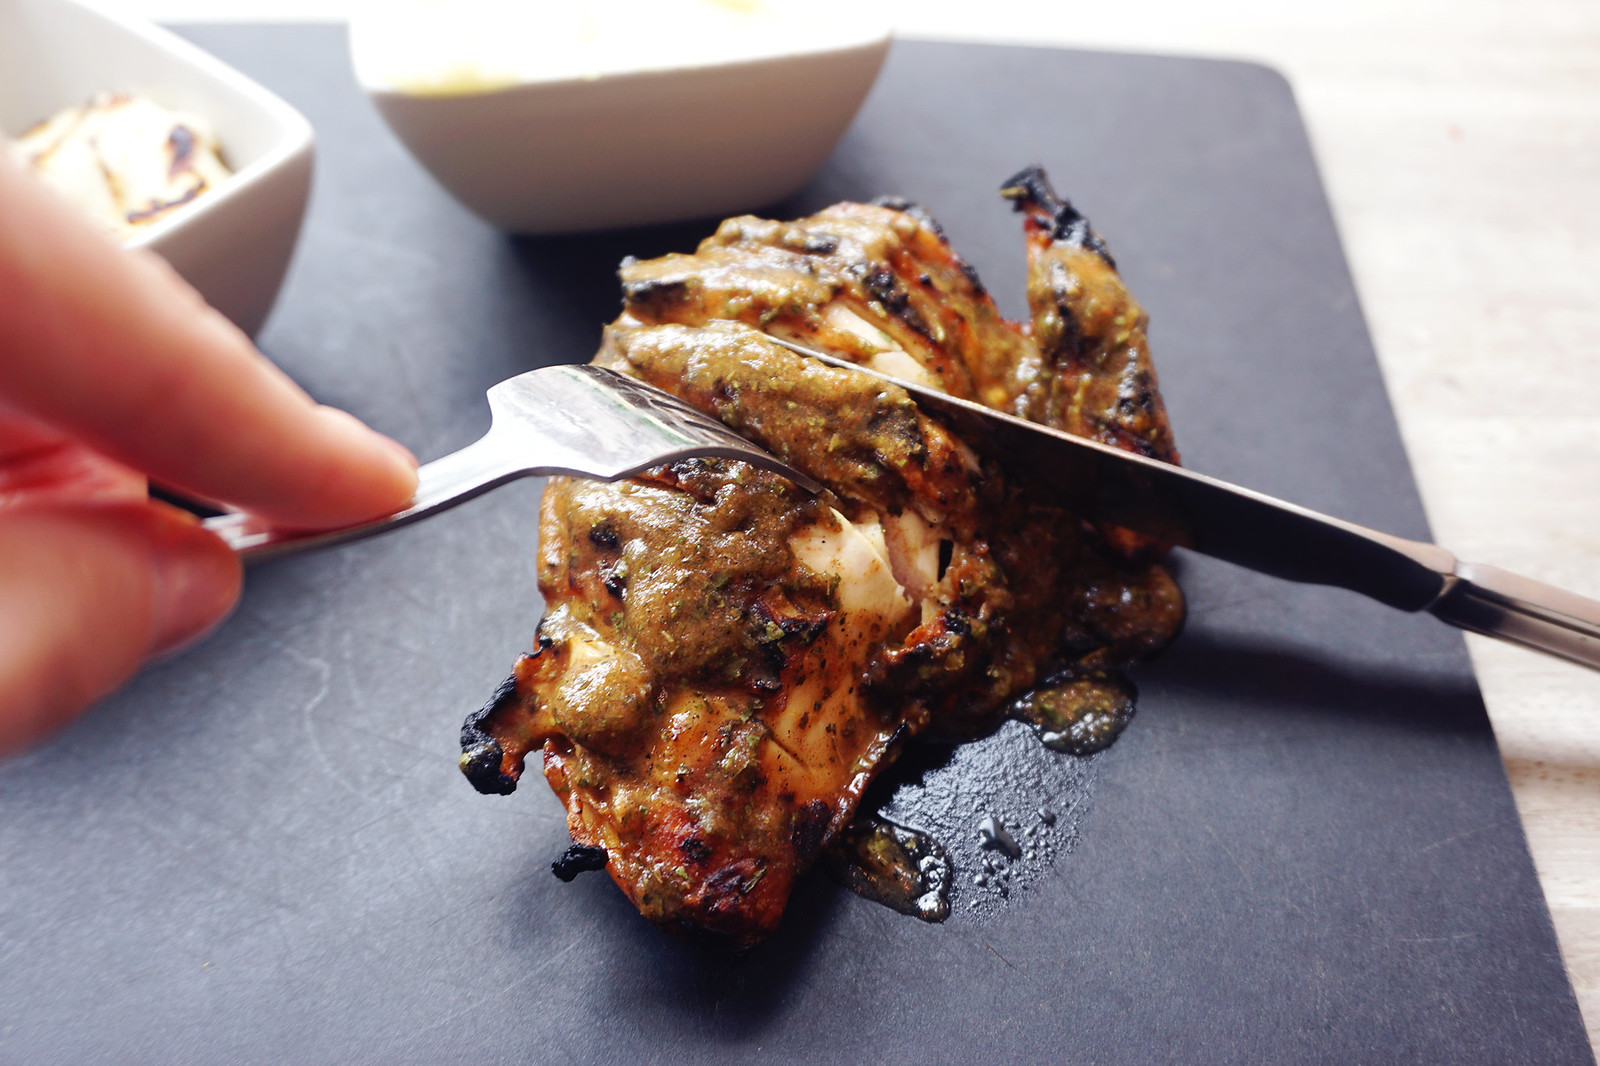 Roosters Piri Piri grilled chicken with Lebanese sauce | gluten free friendly restaurant chain | London + UK